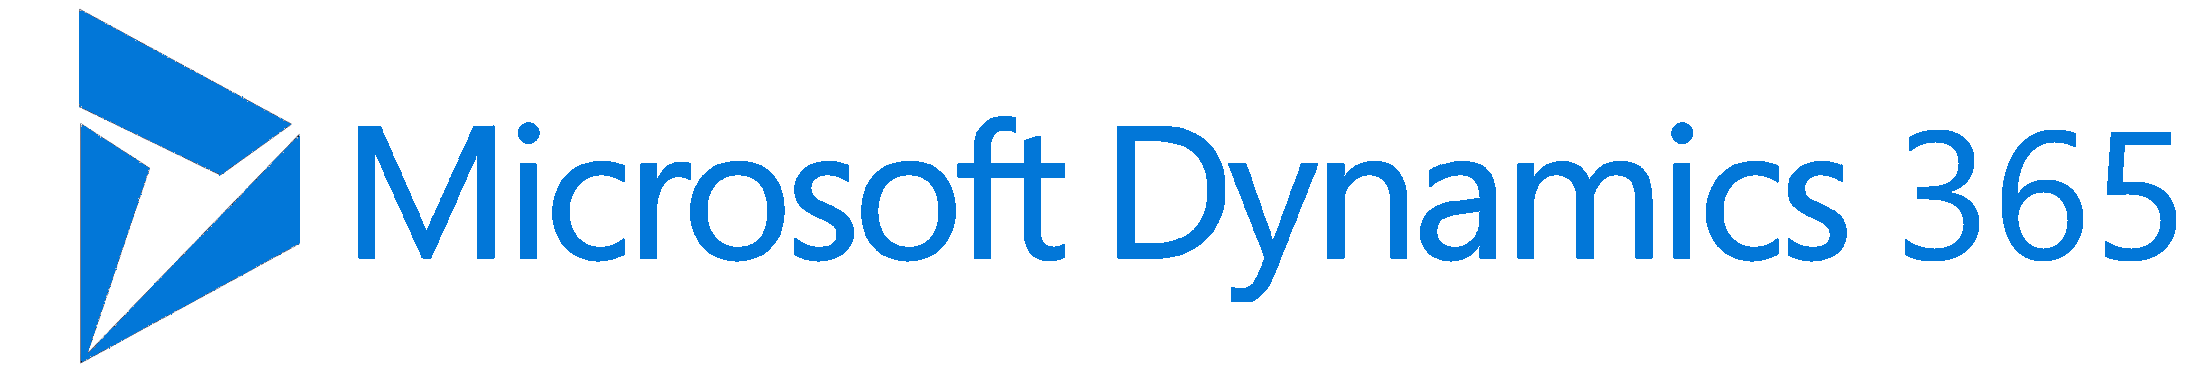 Dynamics CRM 365 Logo - Microsoft Dynamics 365 Larger Logo. Microsoft Dynamics 365